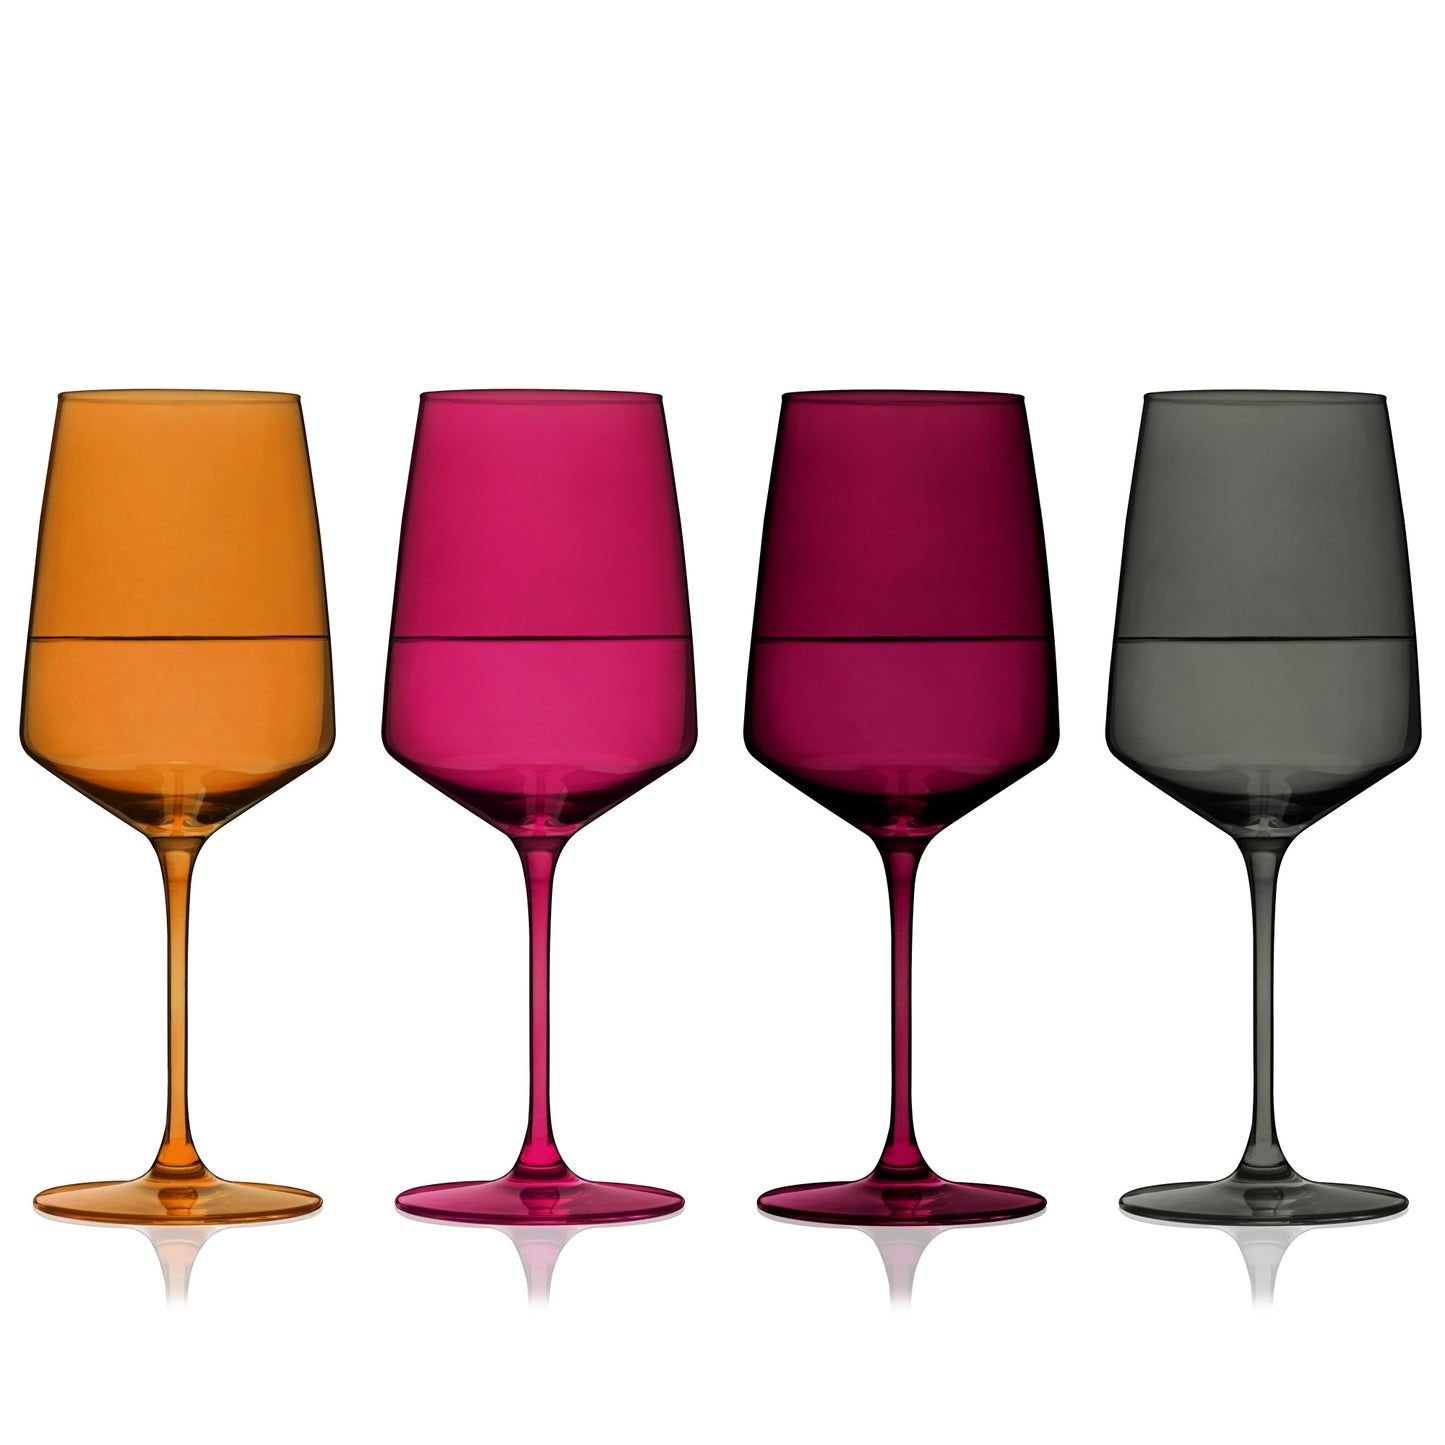 Reserve Nouveau Crystal Wine Glasses - Sunset